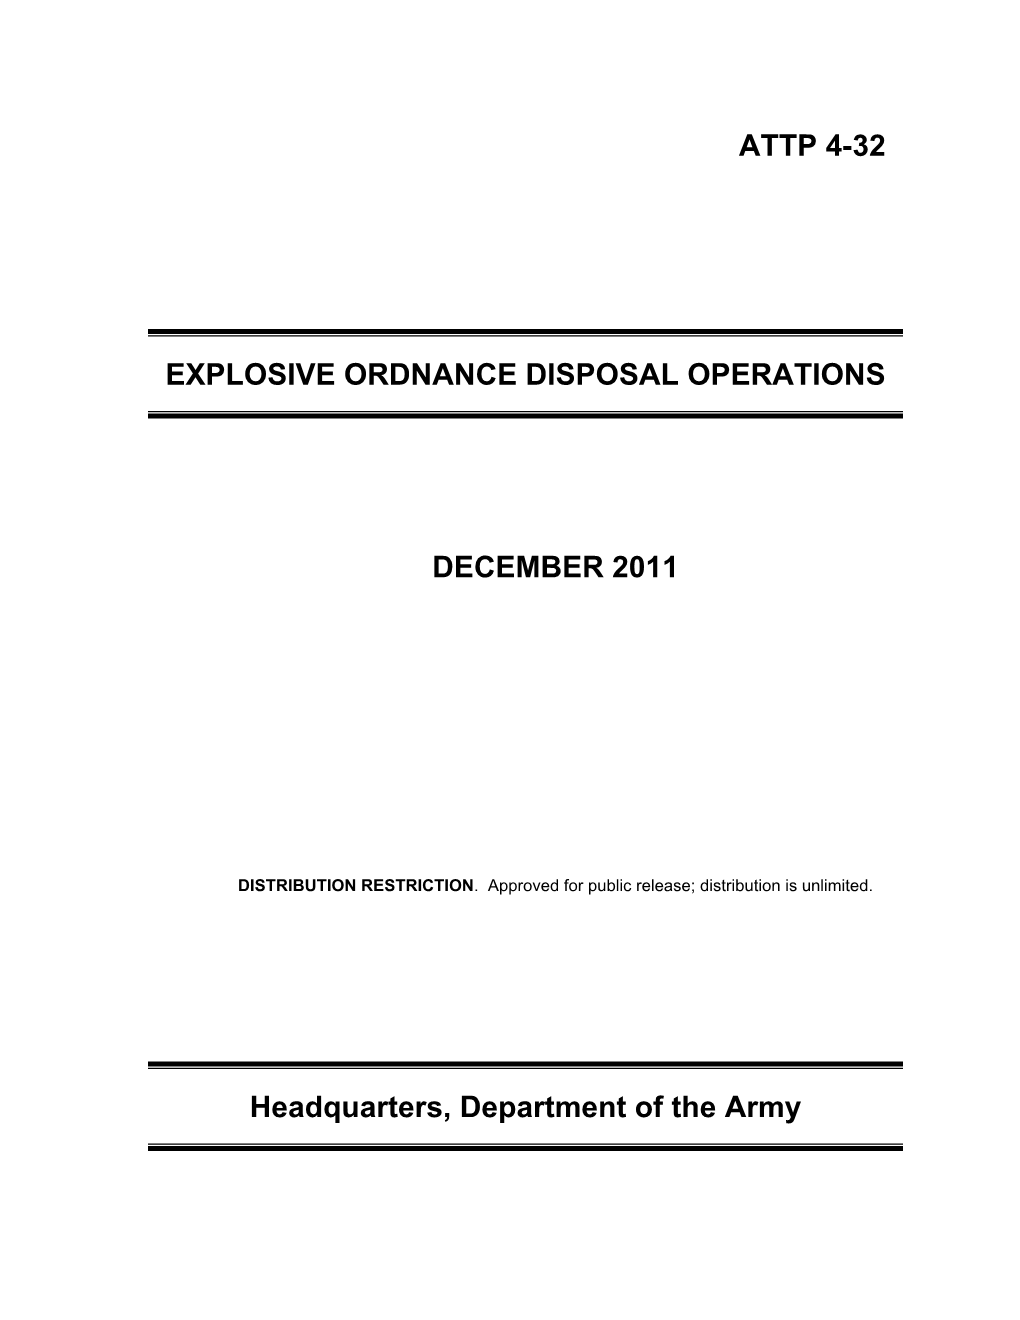 Attp 4-32 Explosive Ordnance Disposal Operations